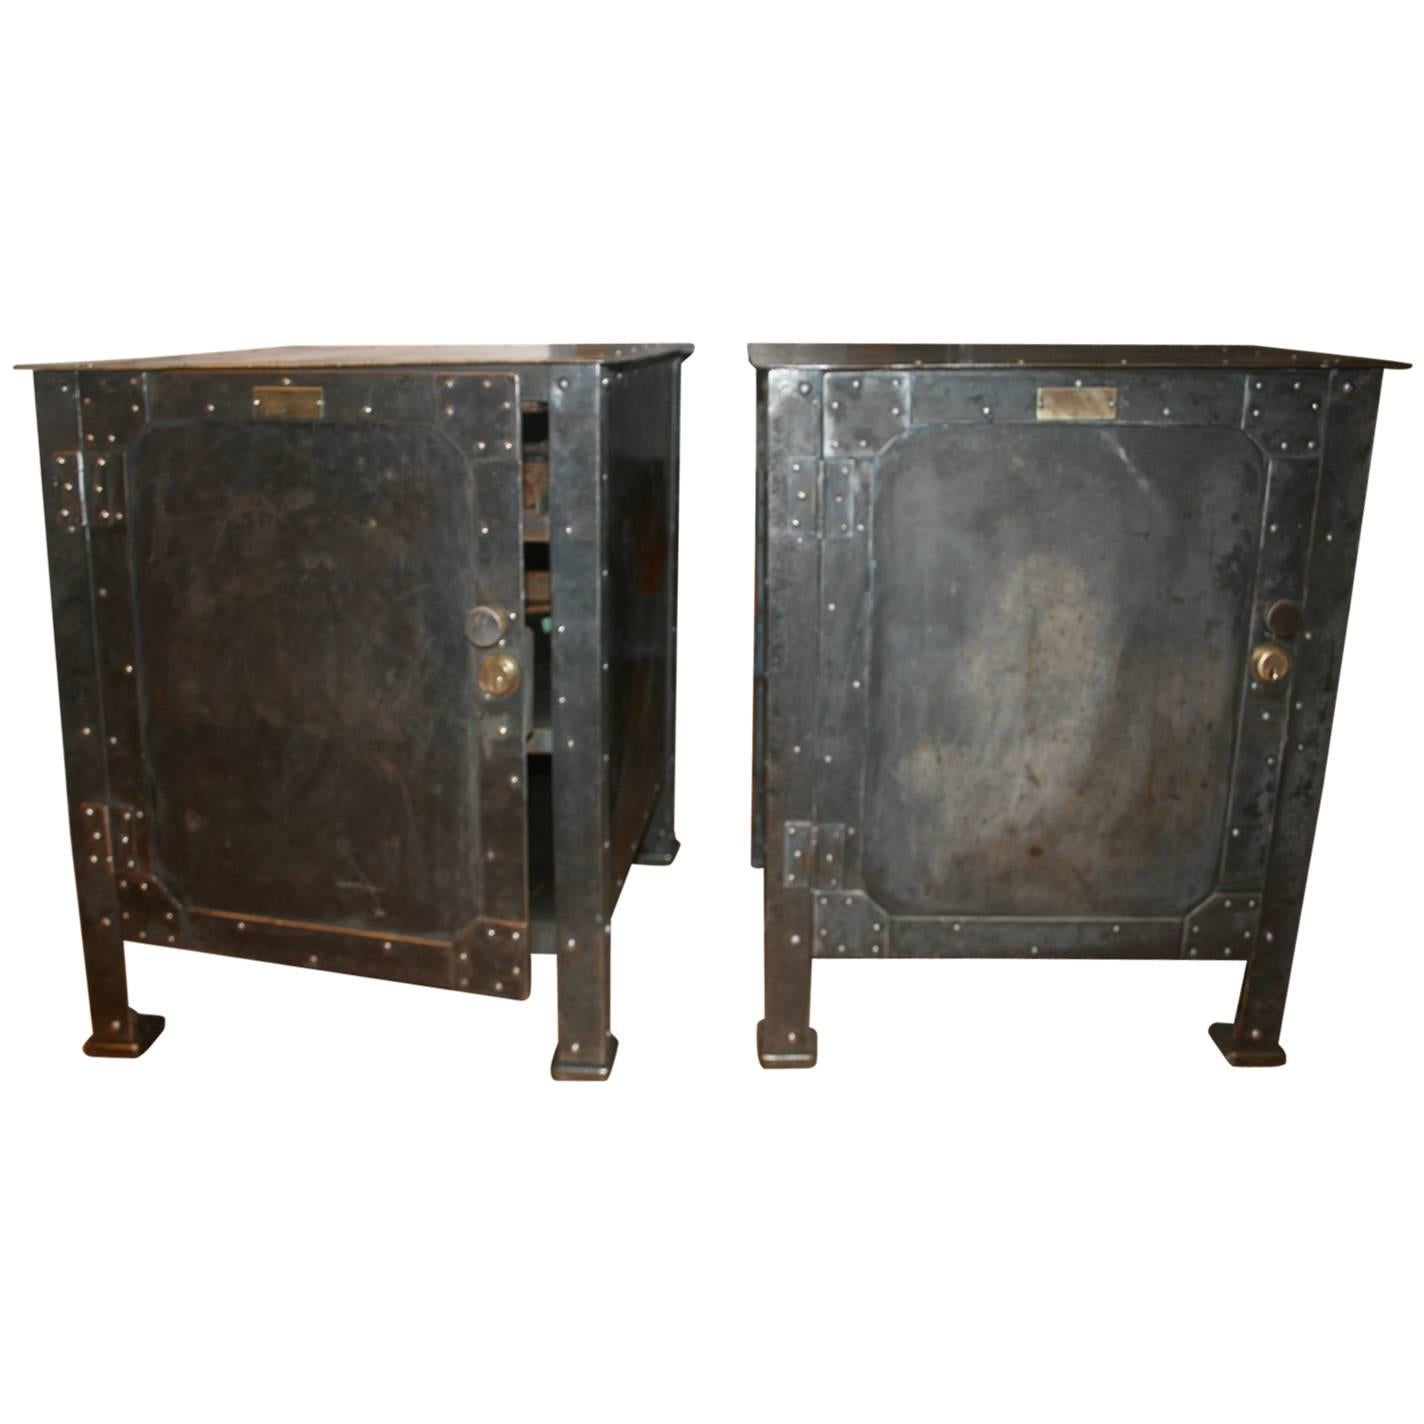 Heavy Steel Industrial Cabinets, circa 1900